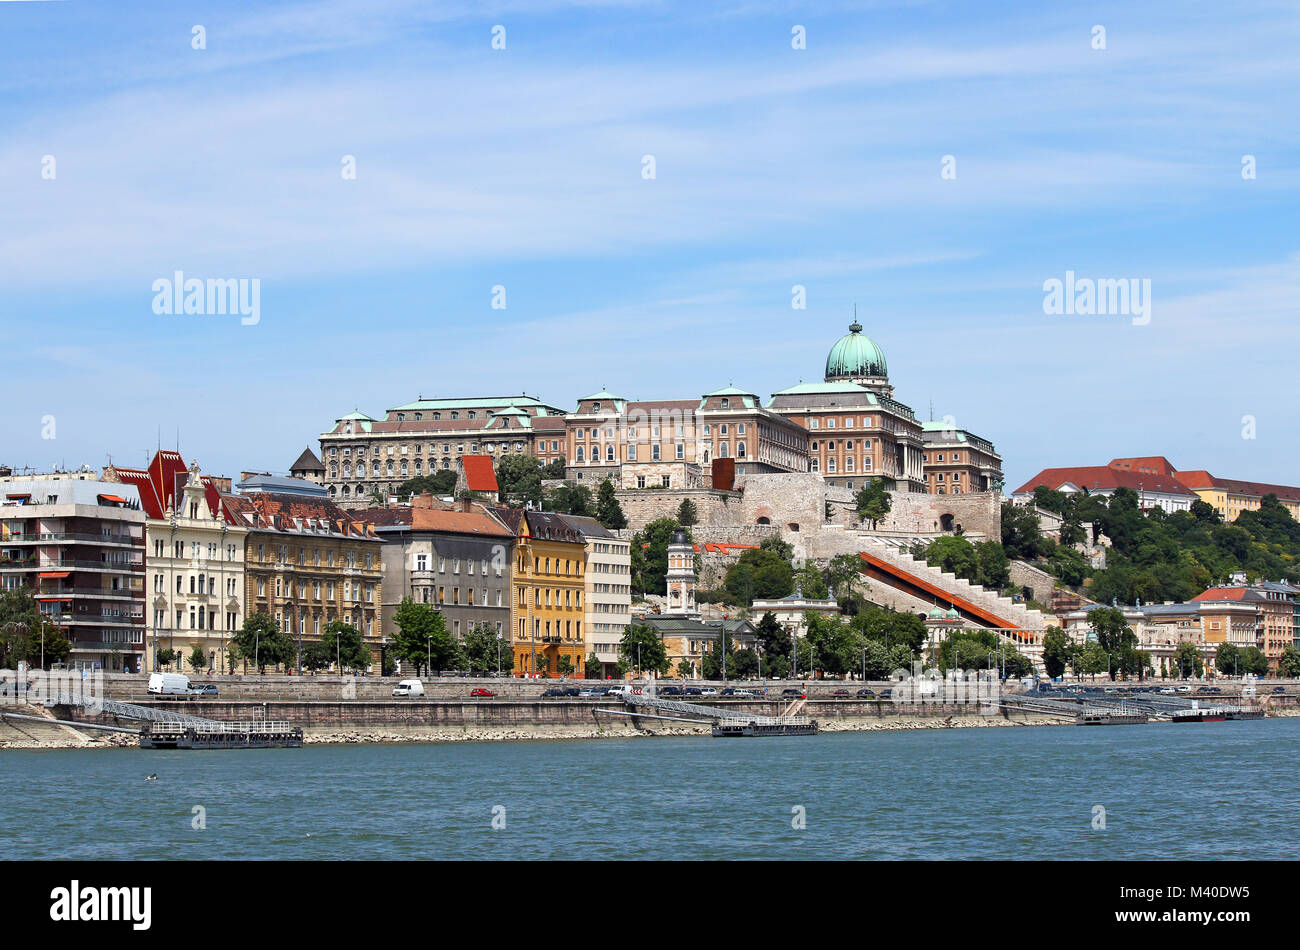 Royal castle on Danube River Budapest Stock Photo